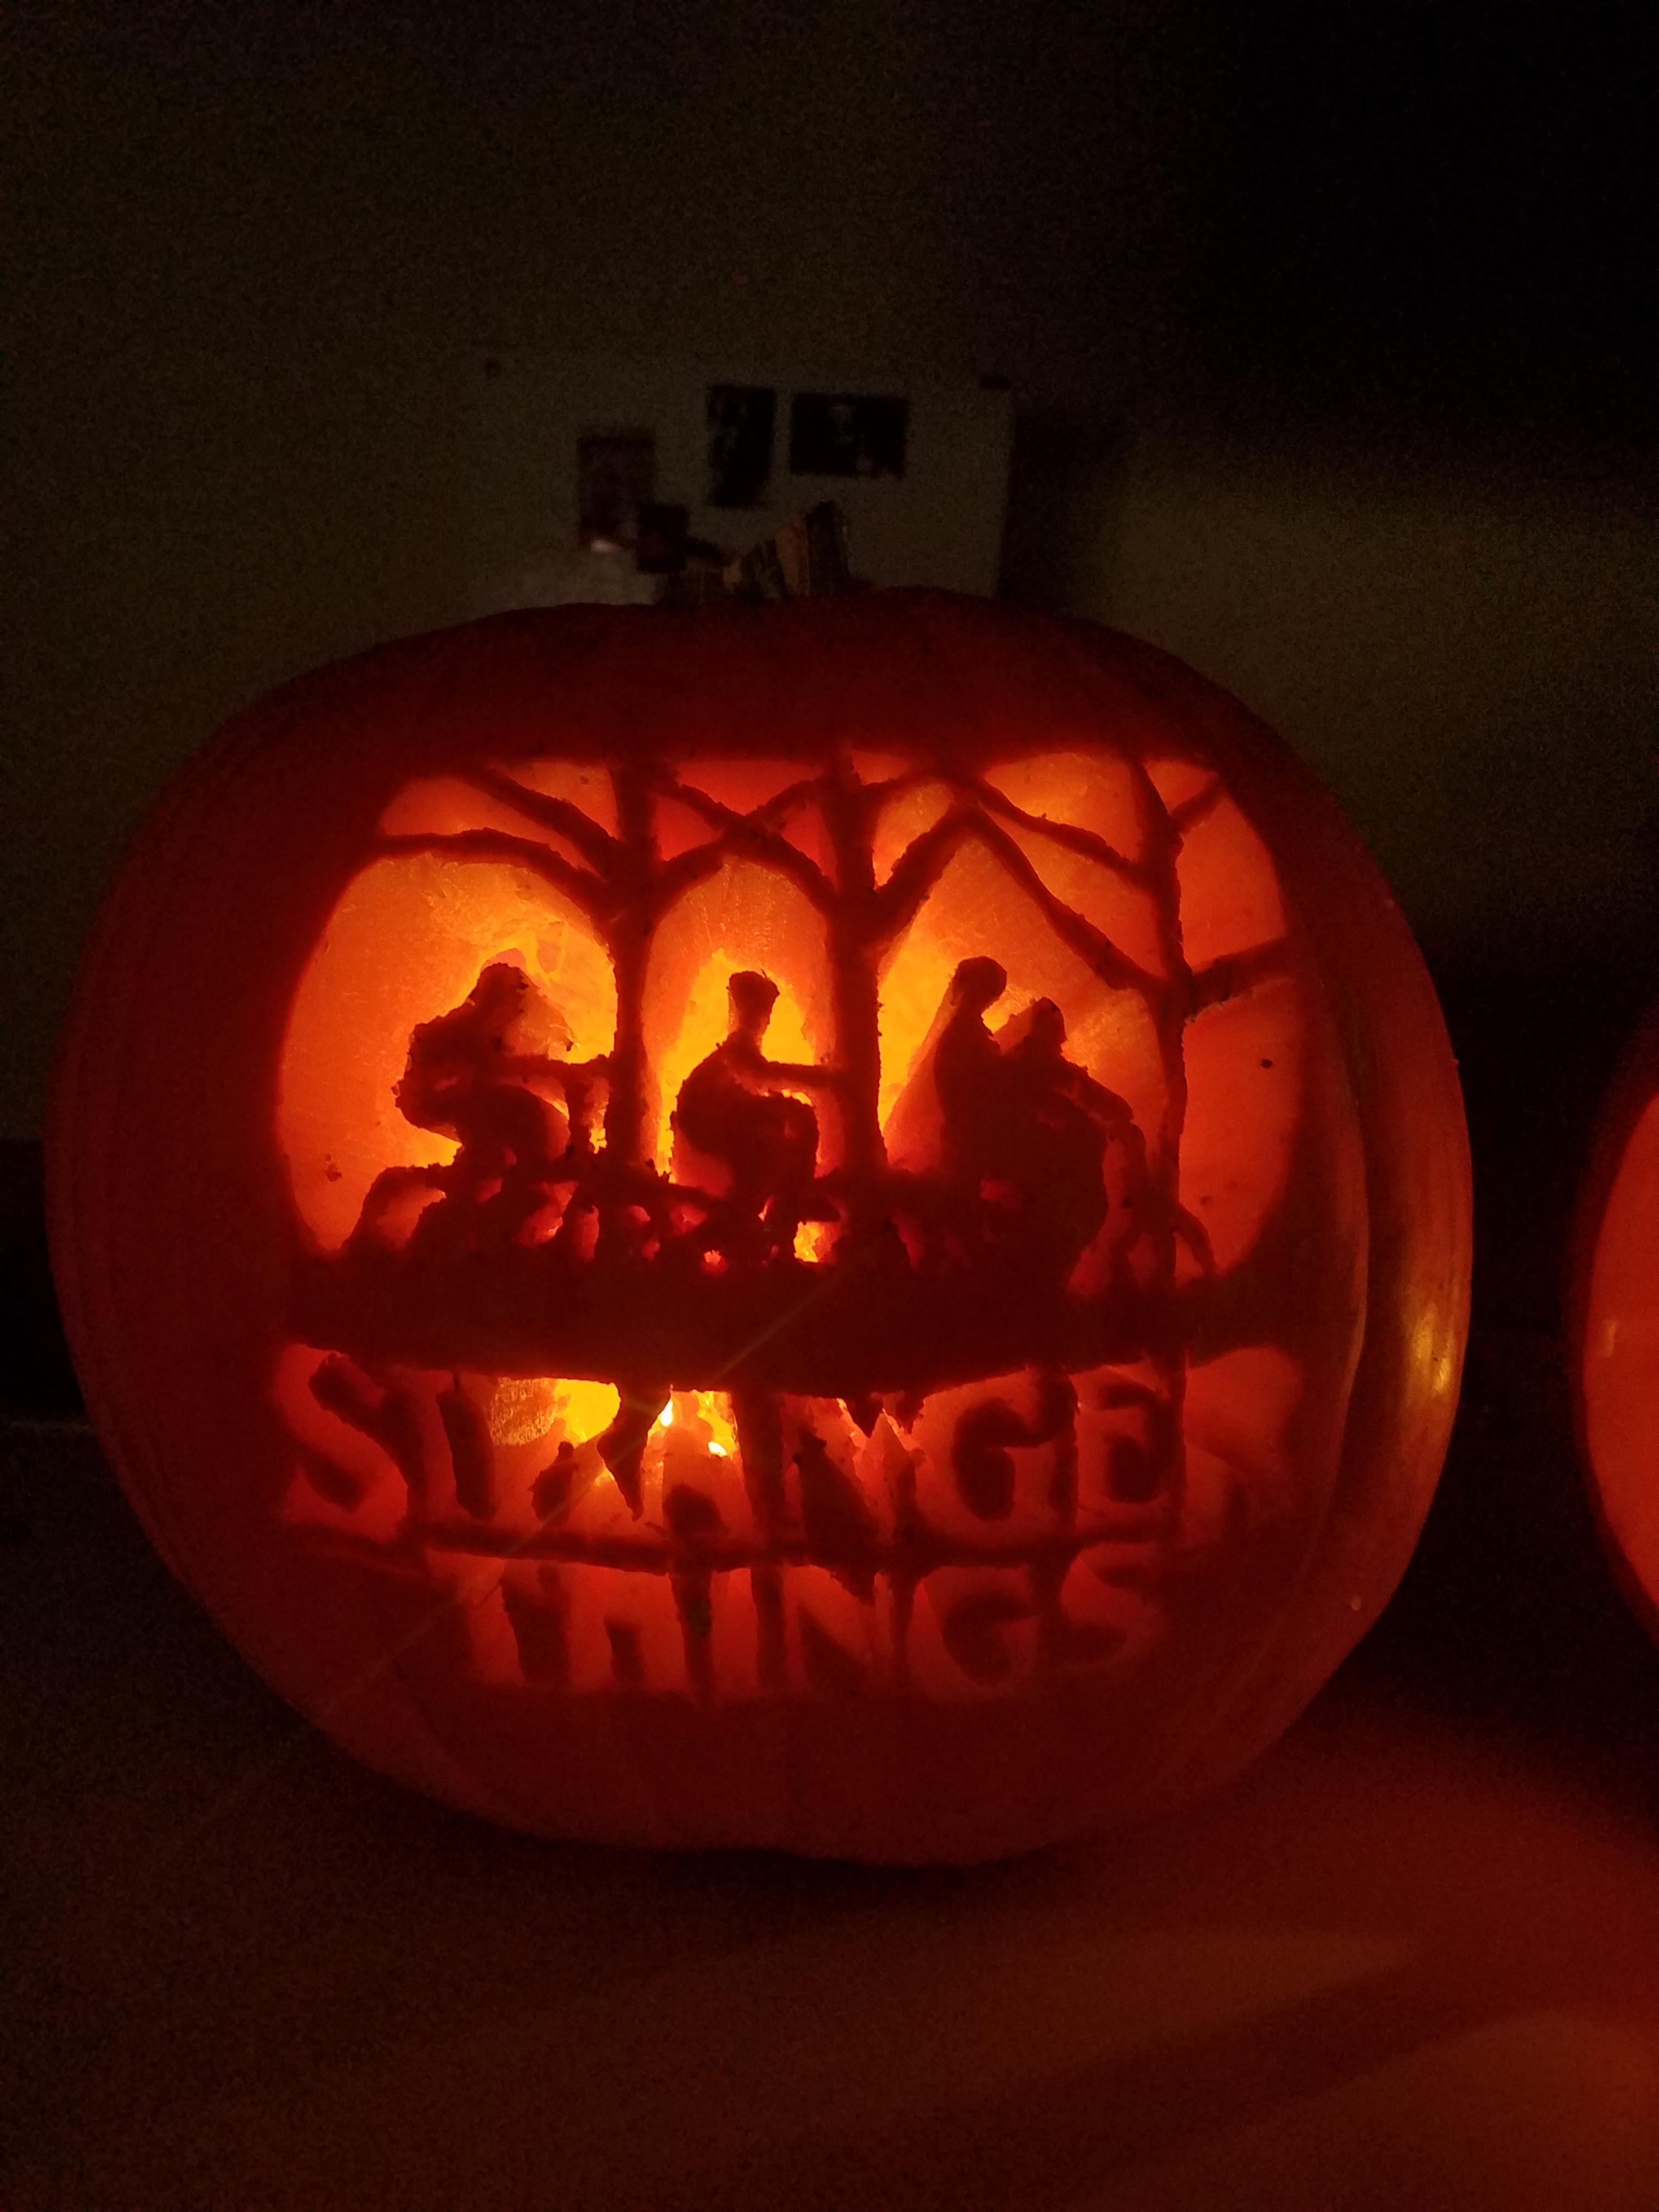 My Stranger Things Pumpkin - Imgur